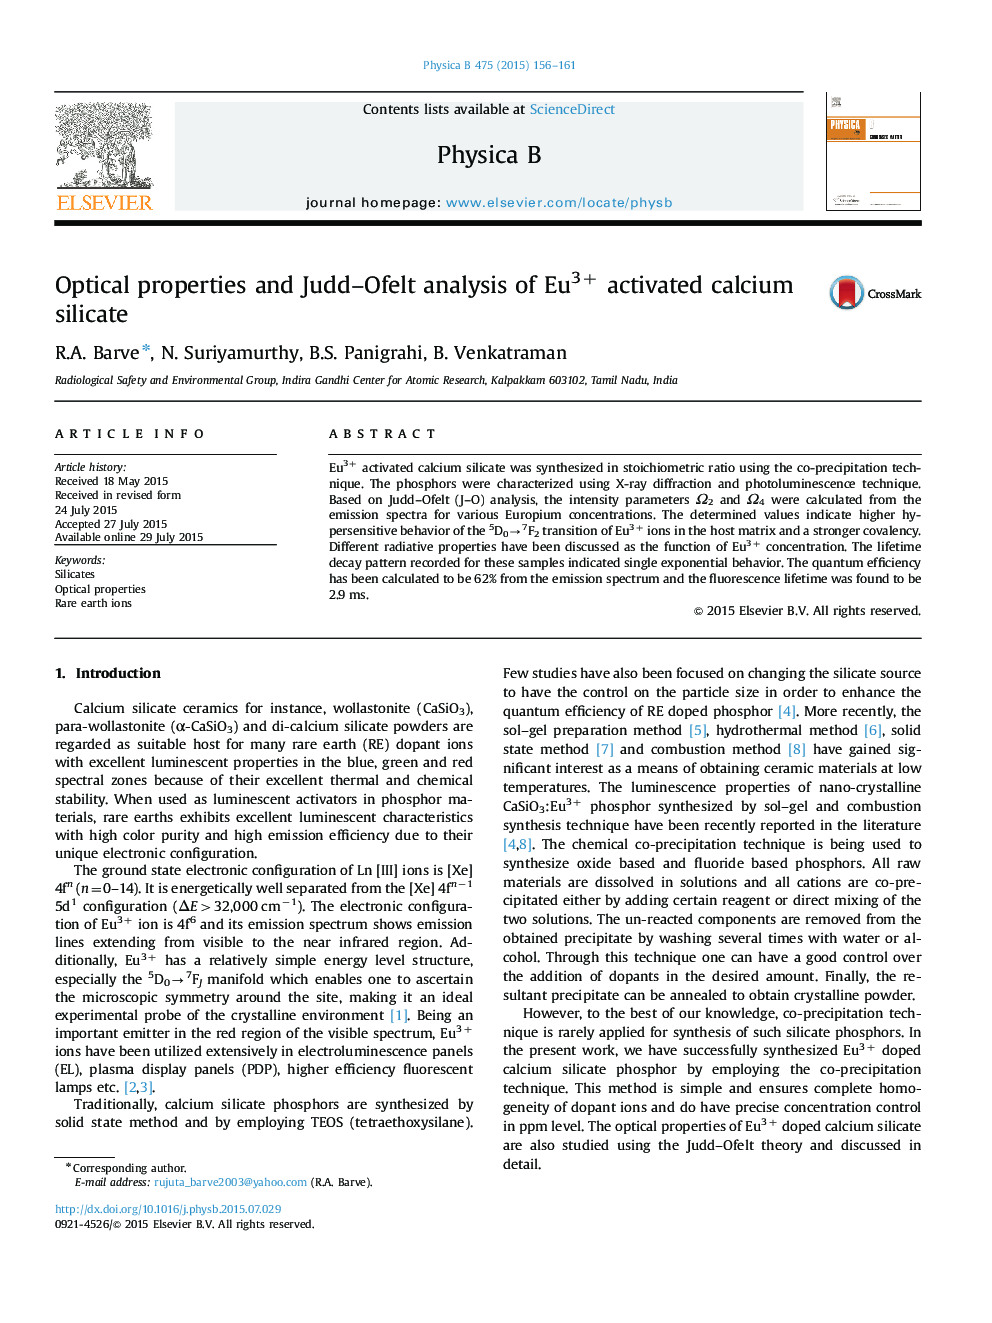 Optical properties and Judd–Ofelt analysis of Eu3+ activated calcium silicate